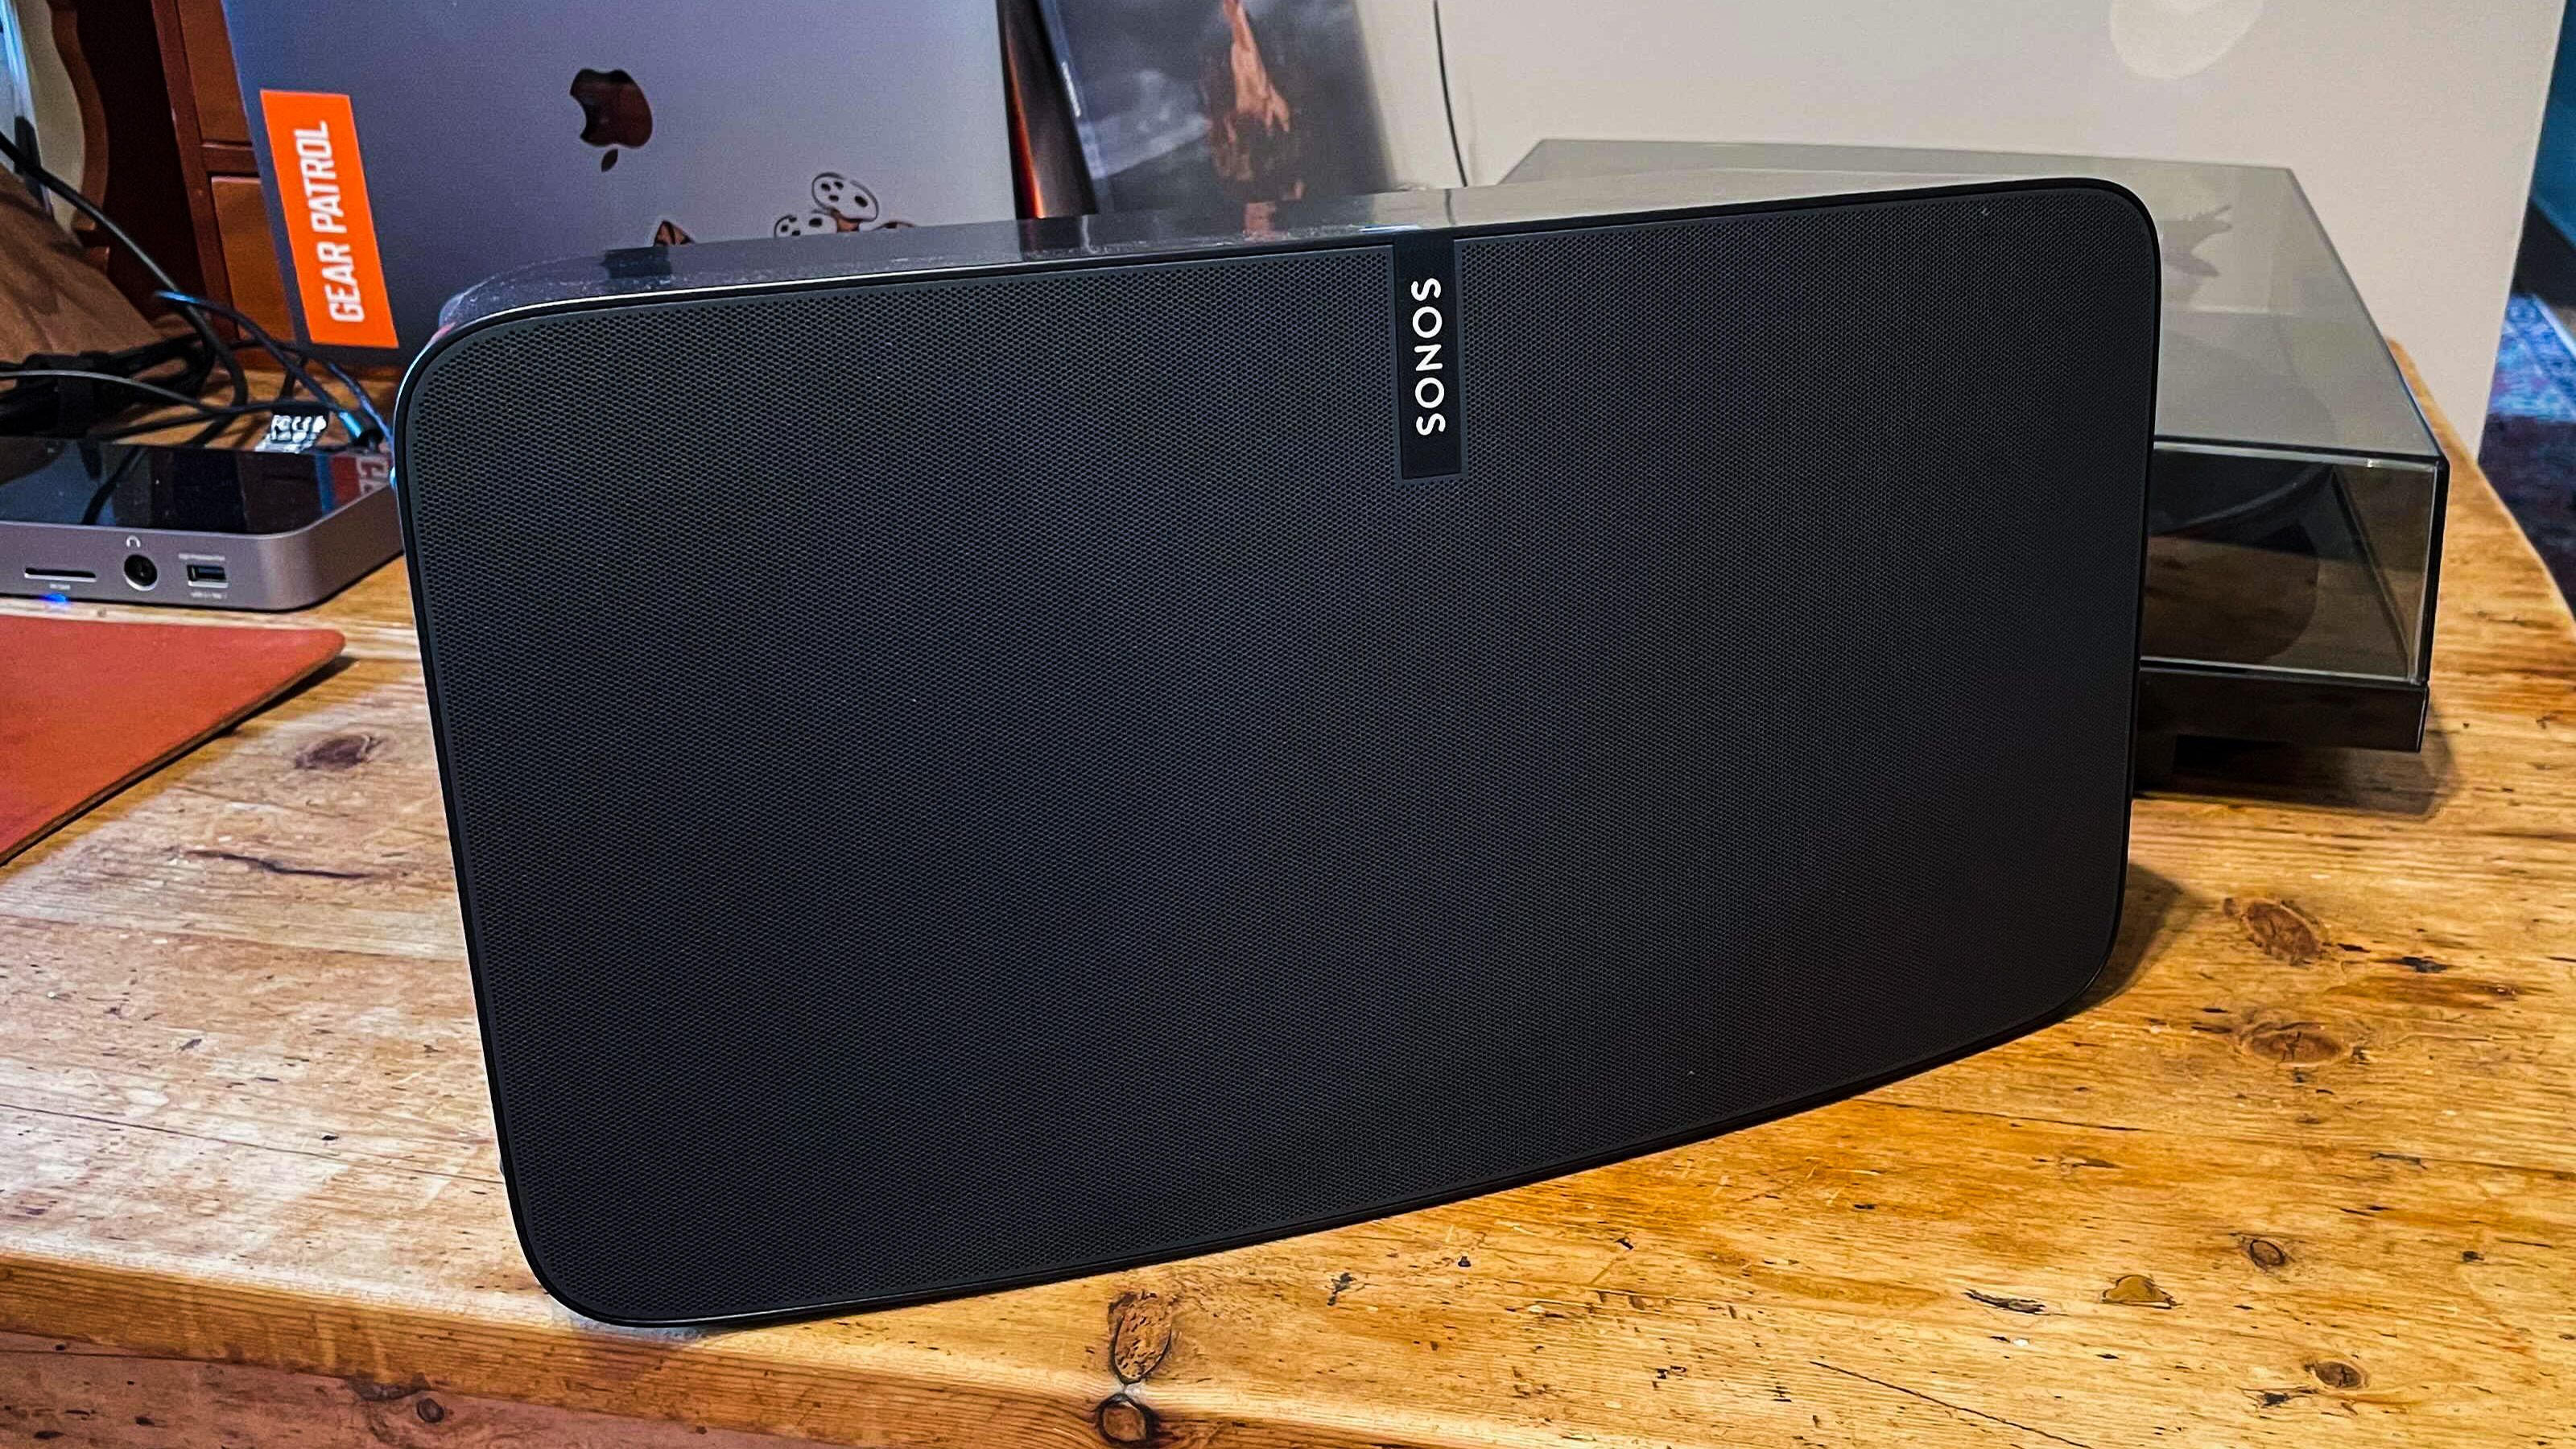 Herske elevation damper How to Stereo Pair a Sonos Play:5 (Gen 2) Speaker